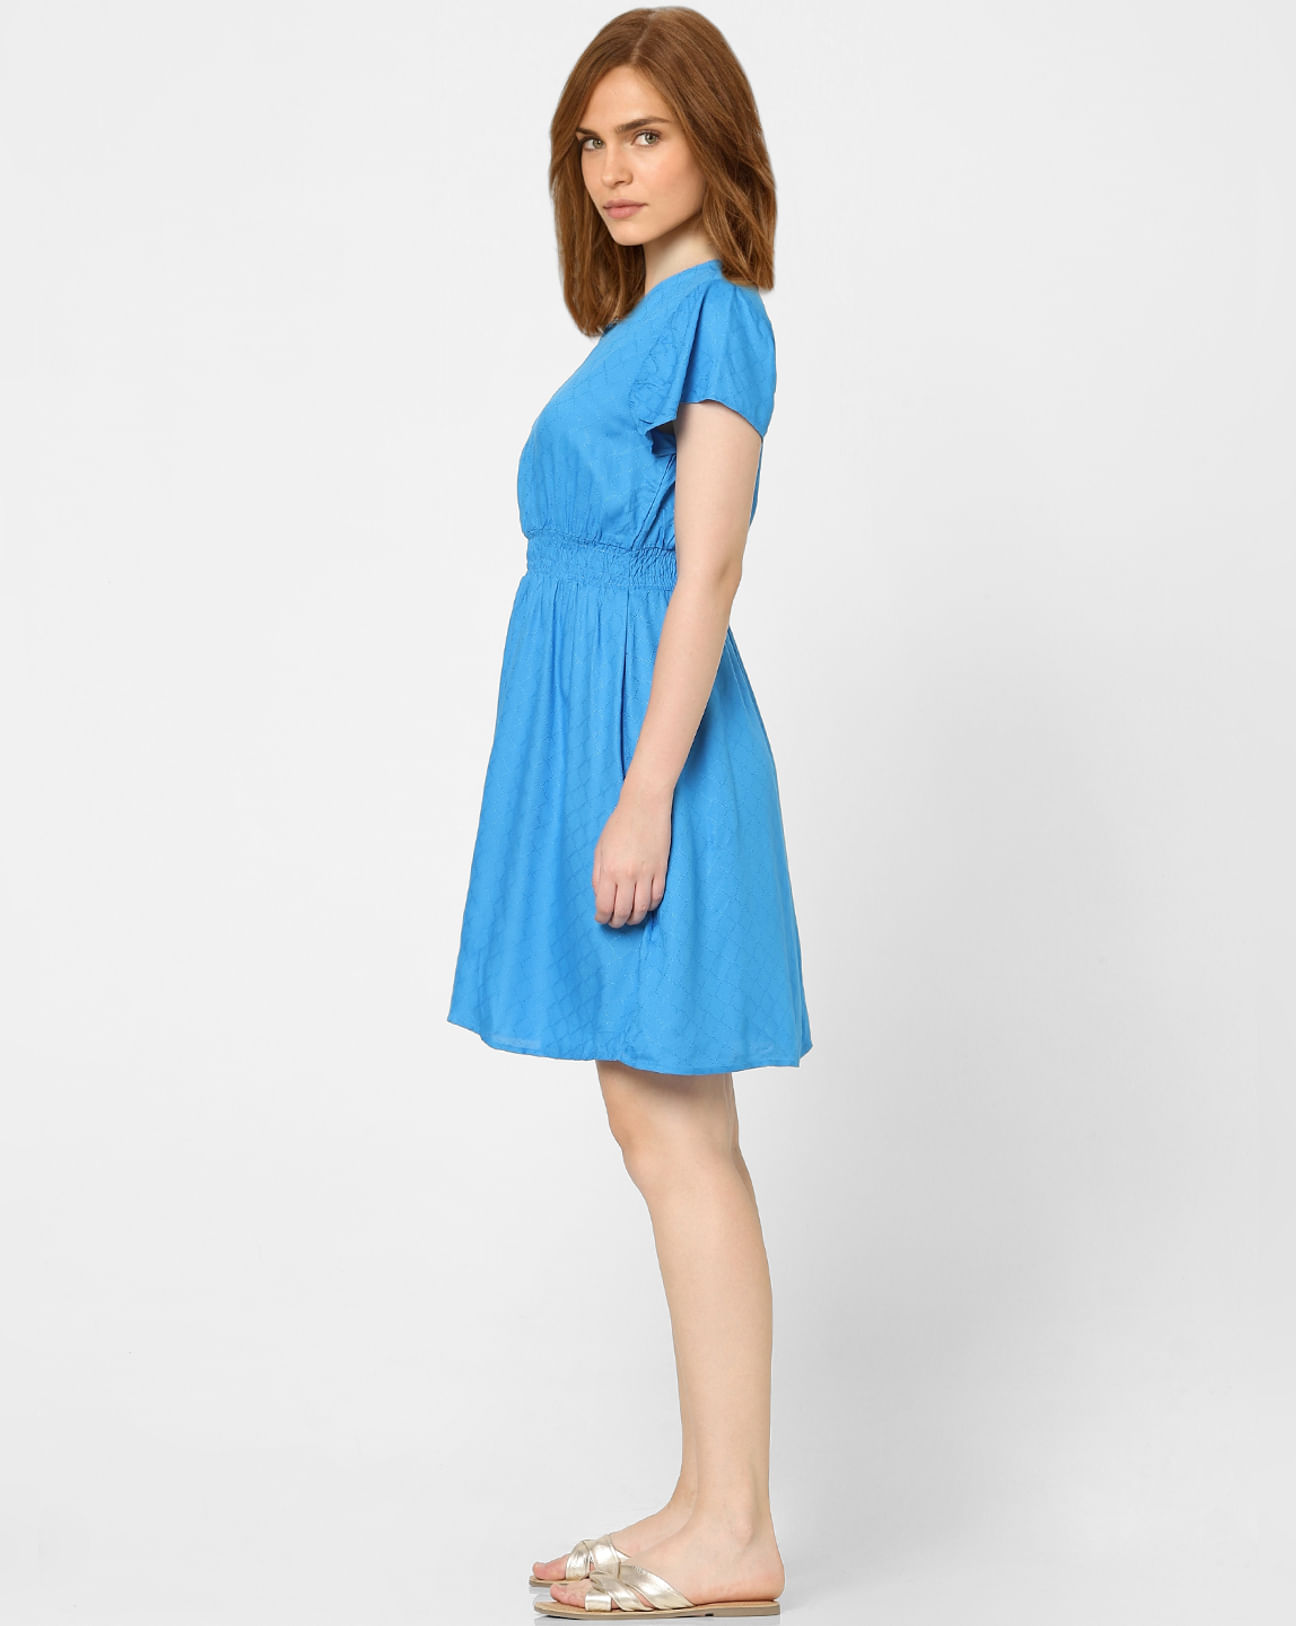 Blue Fit & Flare Dress